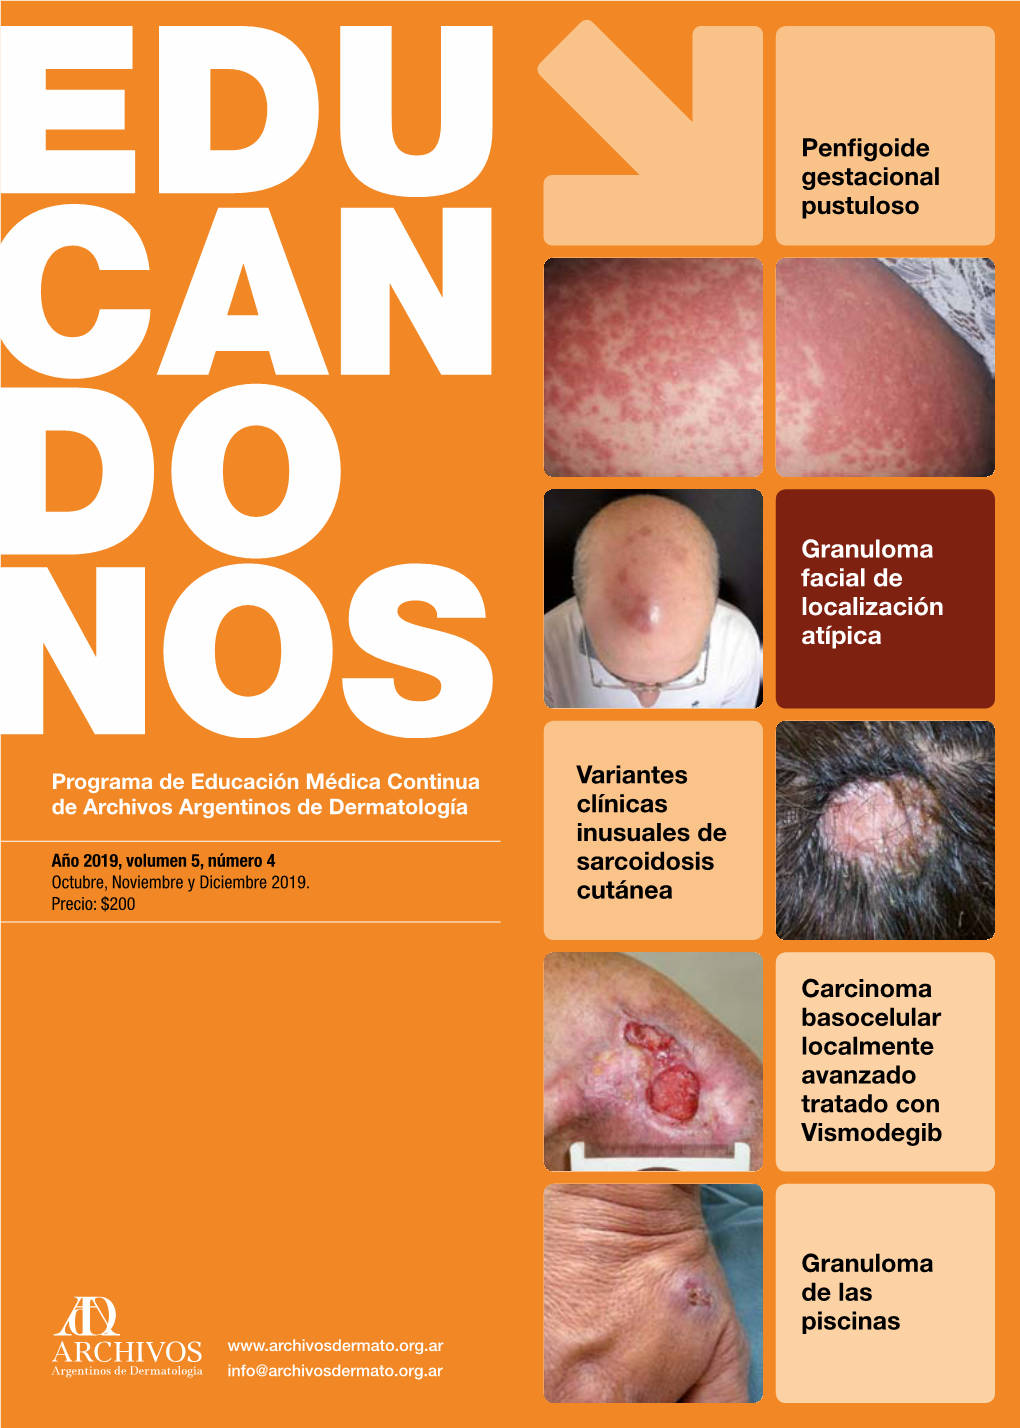 Granuloma De Las Piscinas Carcinoma Basocelular Localmente Avanzado